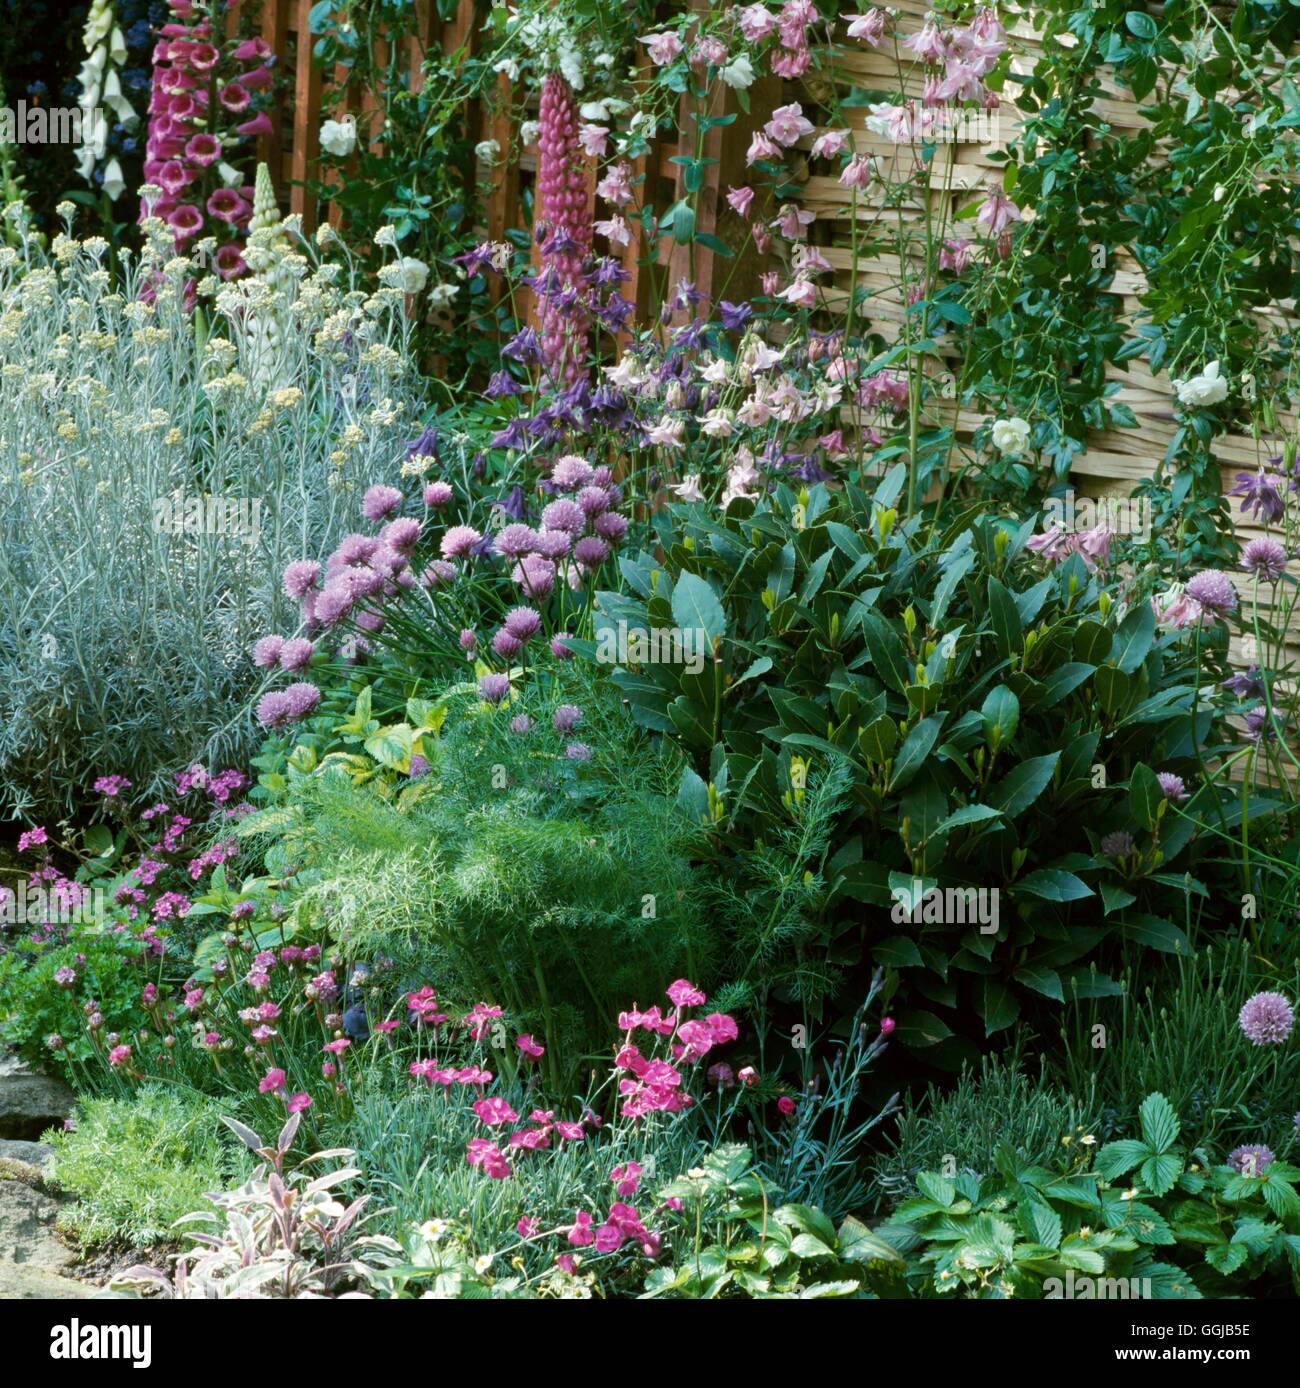 Herb Garden - (Please credit: Photos Horticultural/ Godstone Gardeners Club at Chelsea FS 2000)   HEG089279  Compulsor Stock Photo